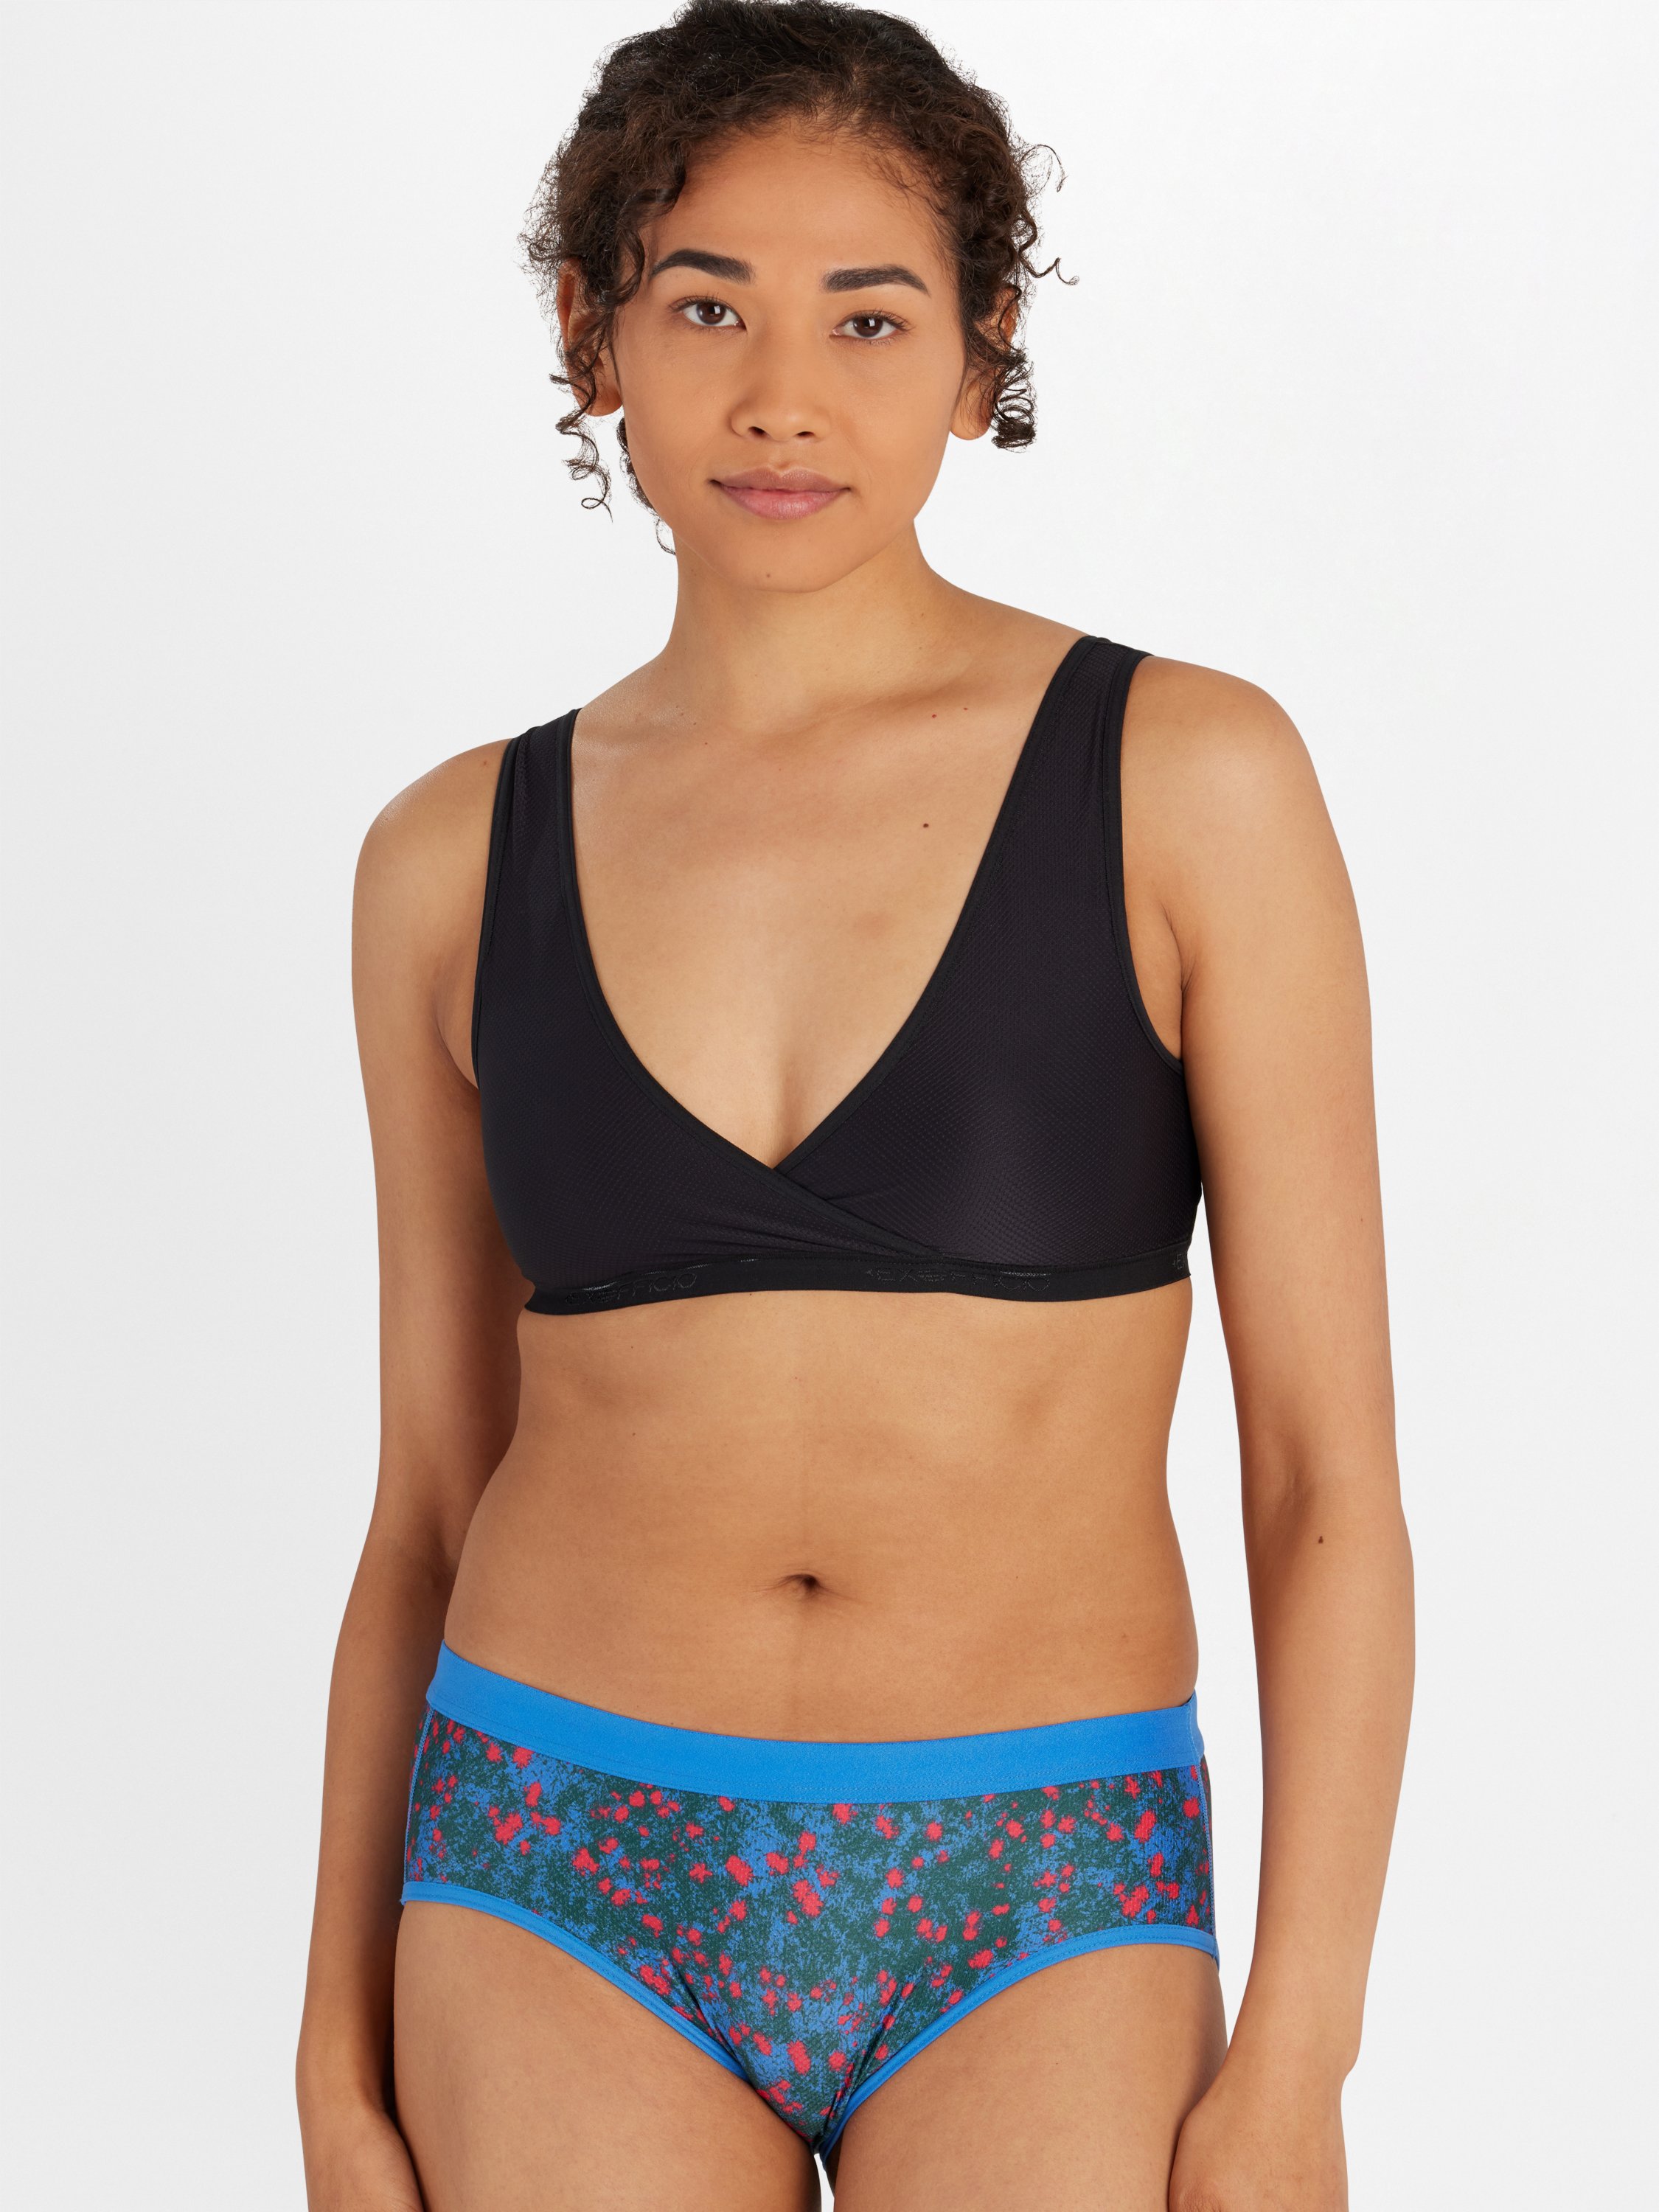 HOFISH Women's Ultra-Soft Thermal Bottom Underwear Stretchy